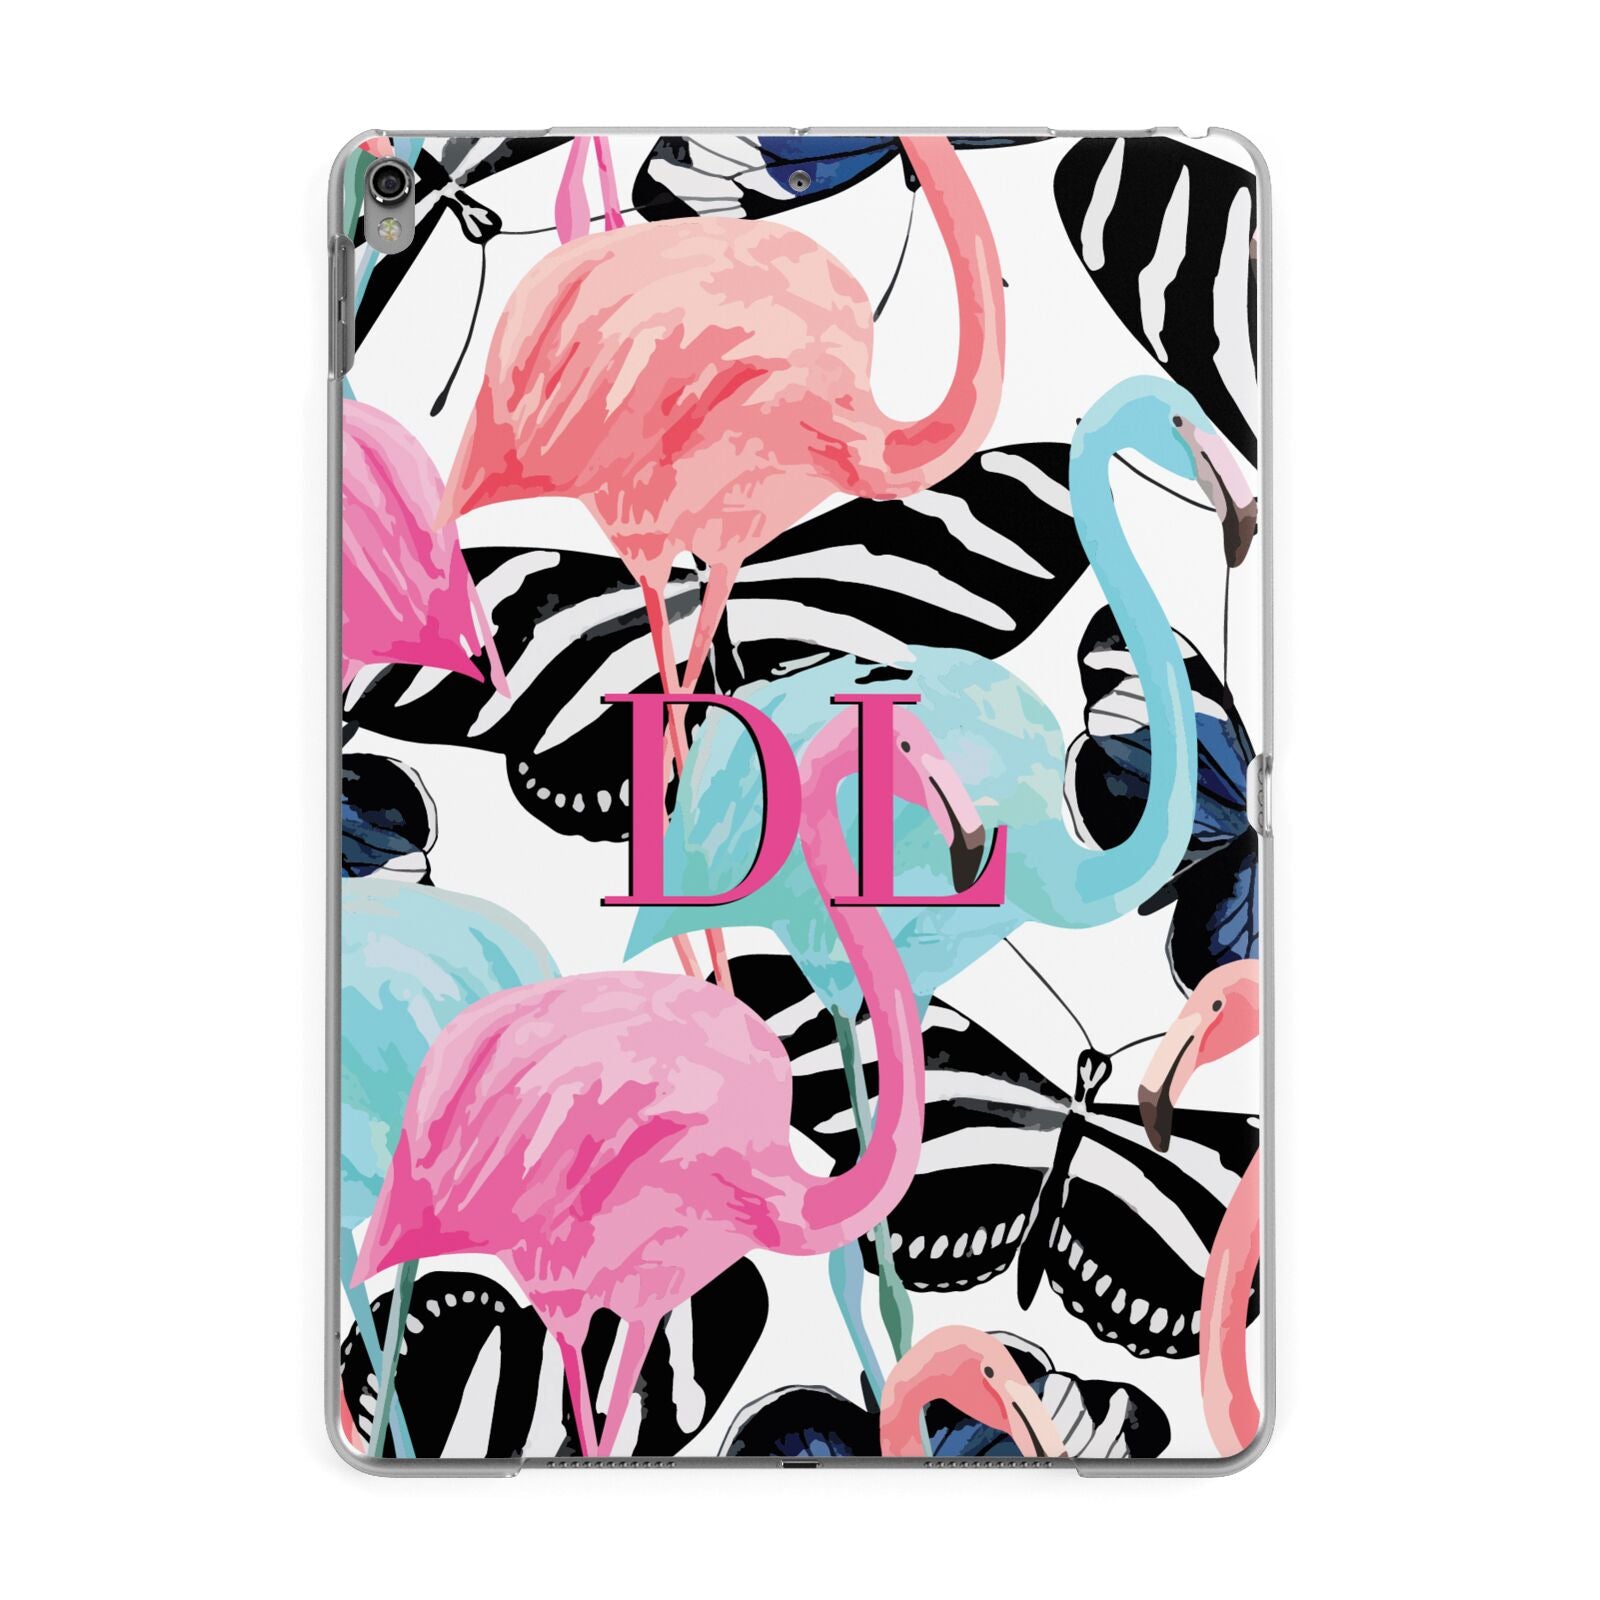 Butterflies Flamingos Apple iPad Grey Case